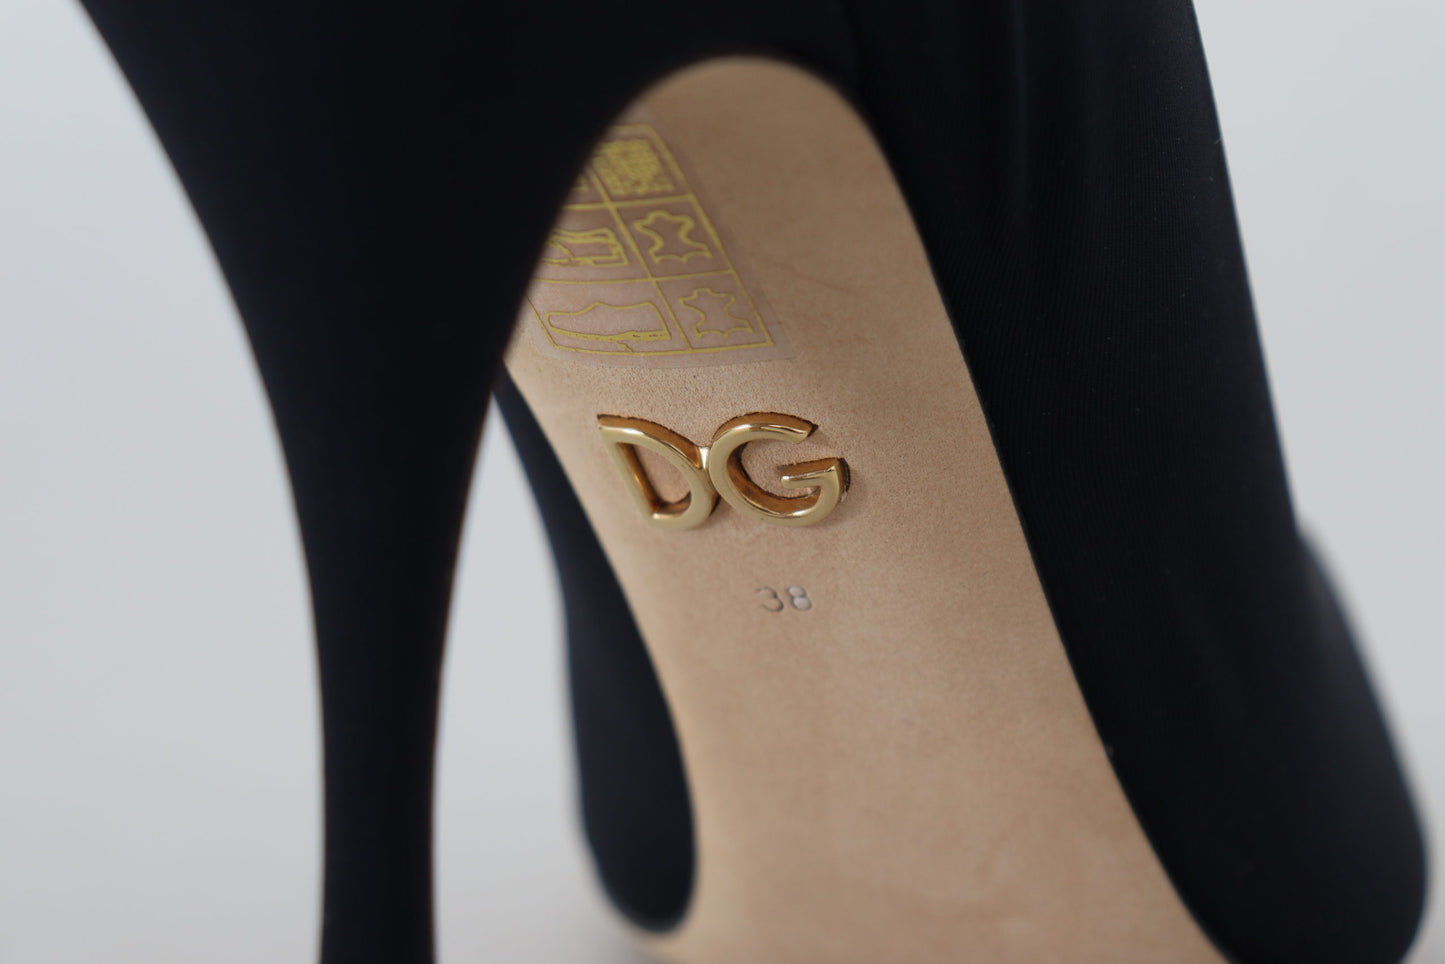 Dolce & Gabbana Black Socks Stretch Crystal Pumps Shoes - DEA STILOSA MILANO